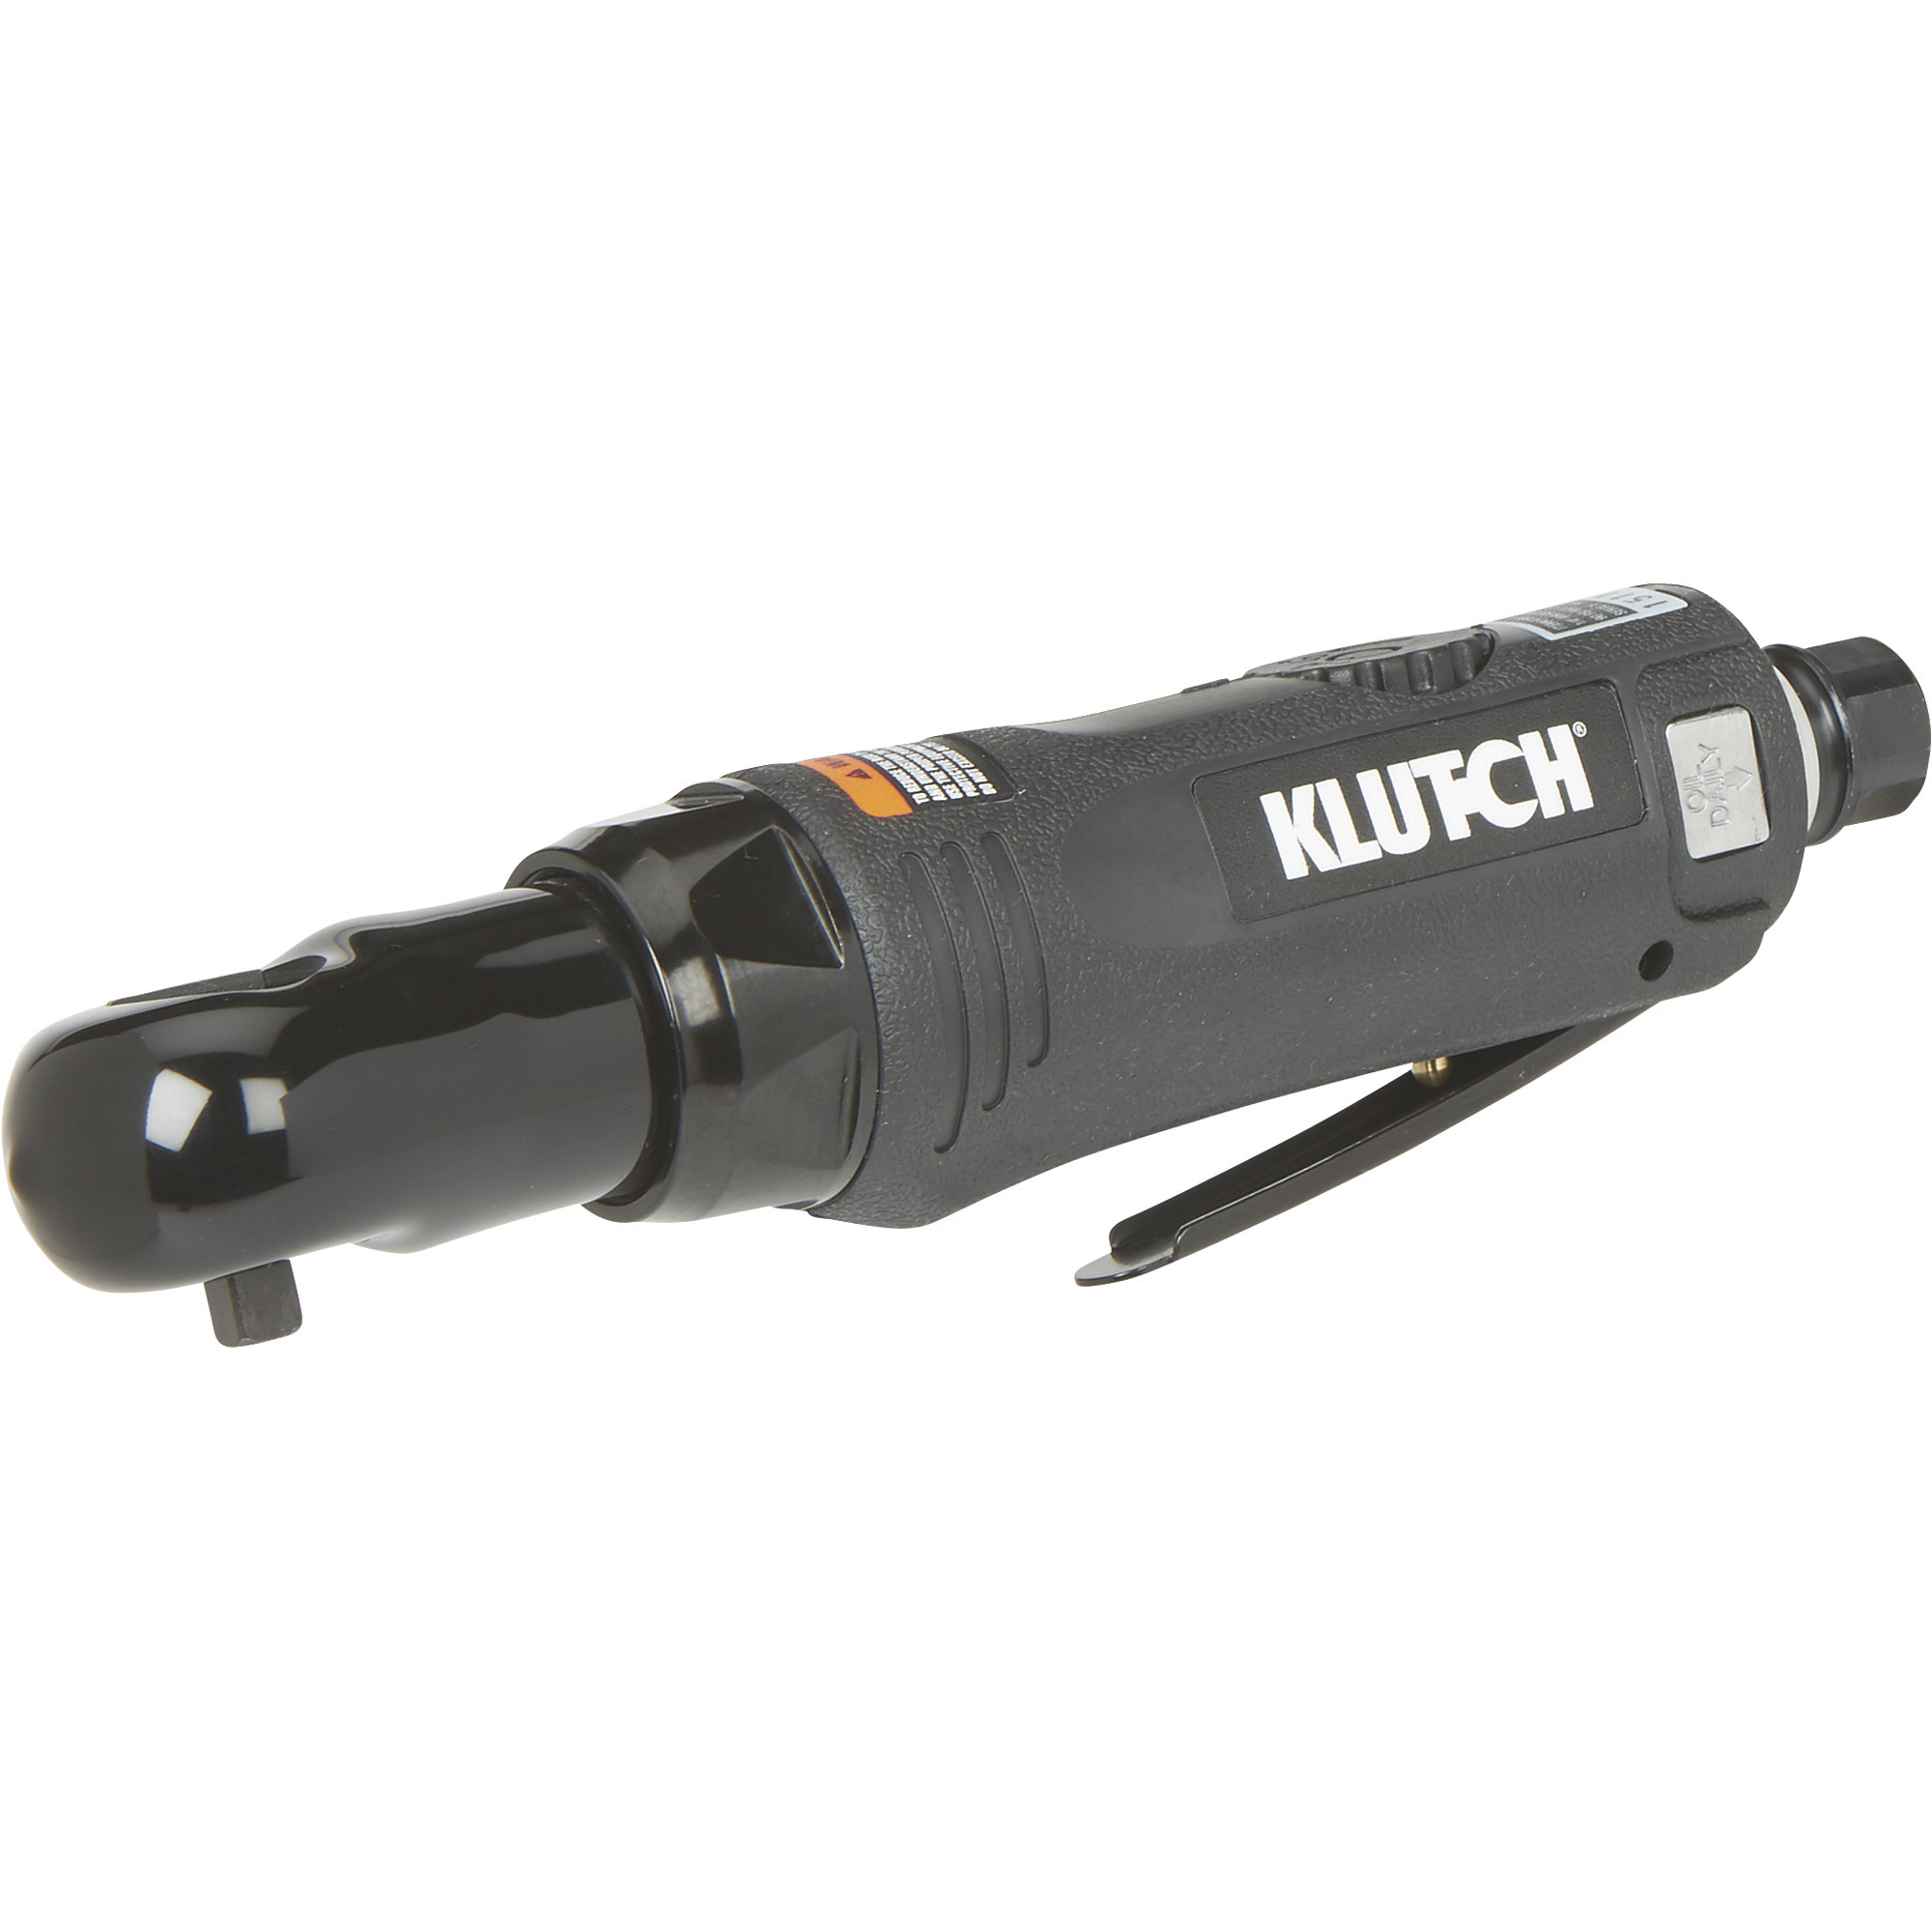 Klutch Mini Air Ratchet Wrench, 1/4Inch Drive, 30 Ft./Lbs. Torque, 200 RPM